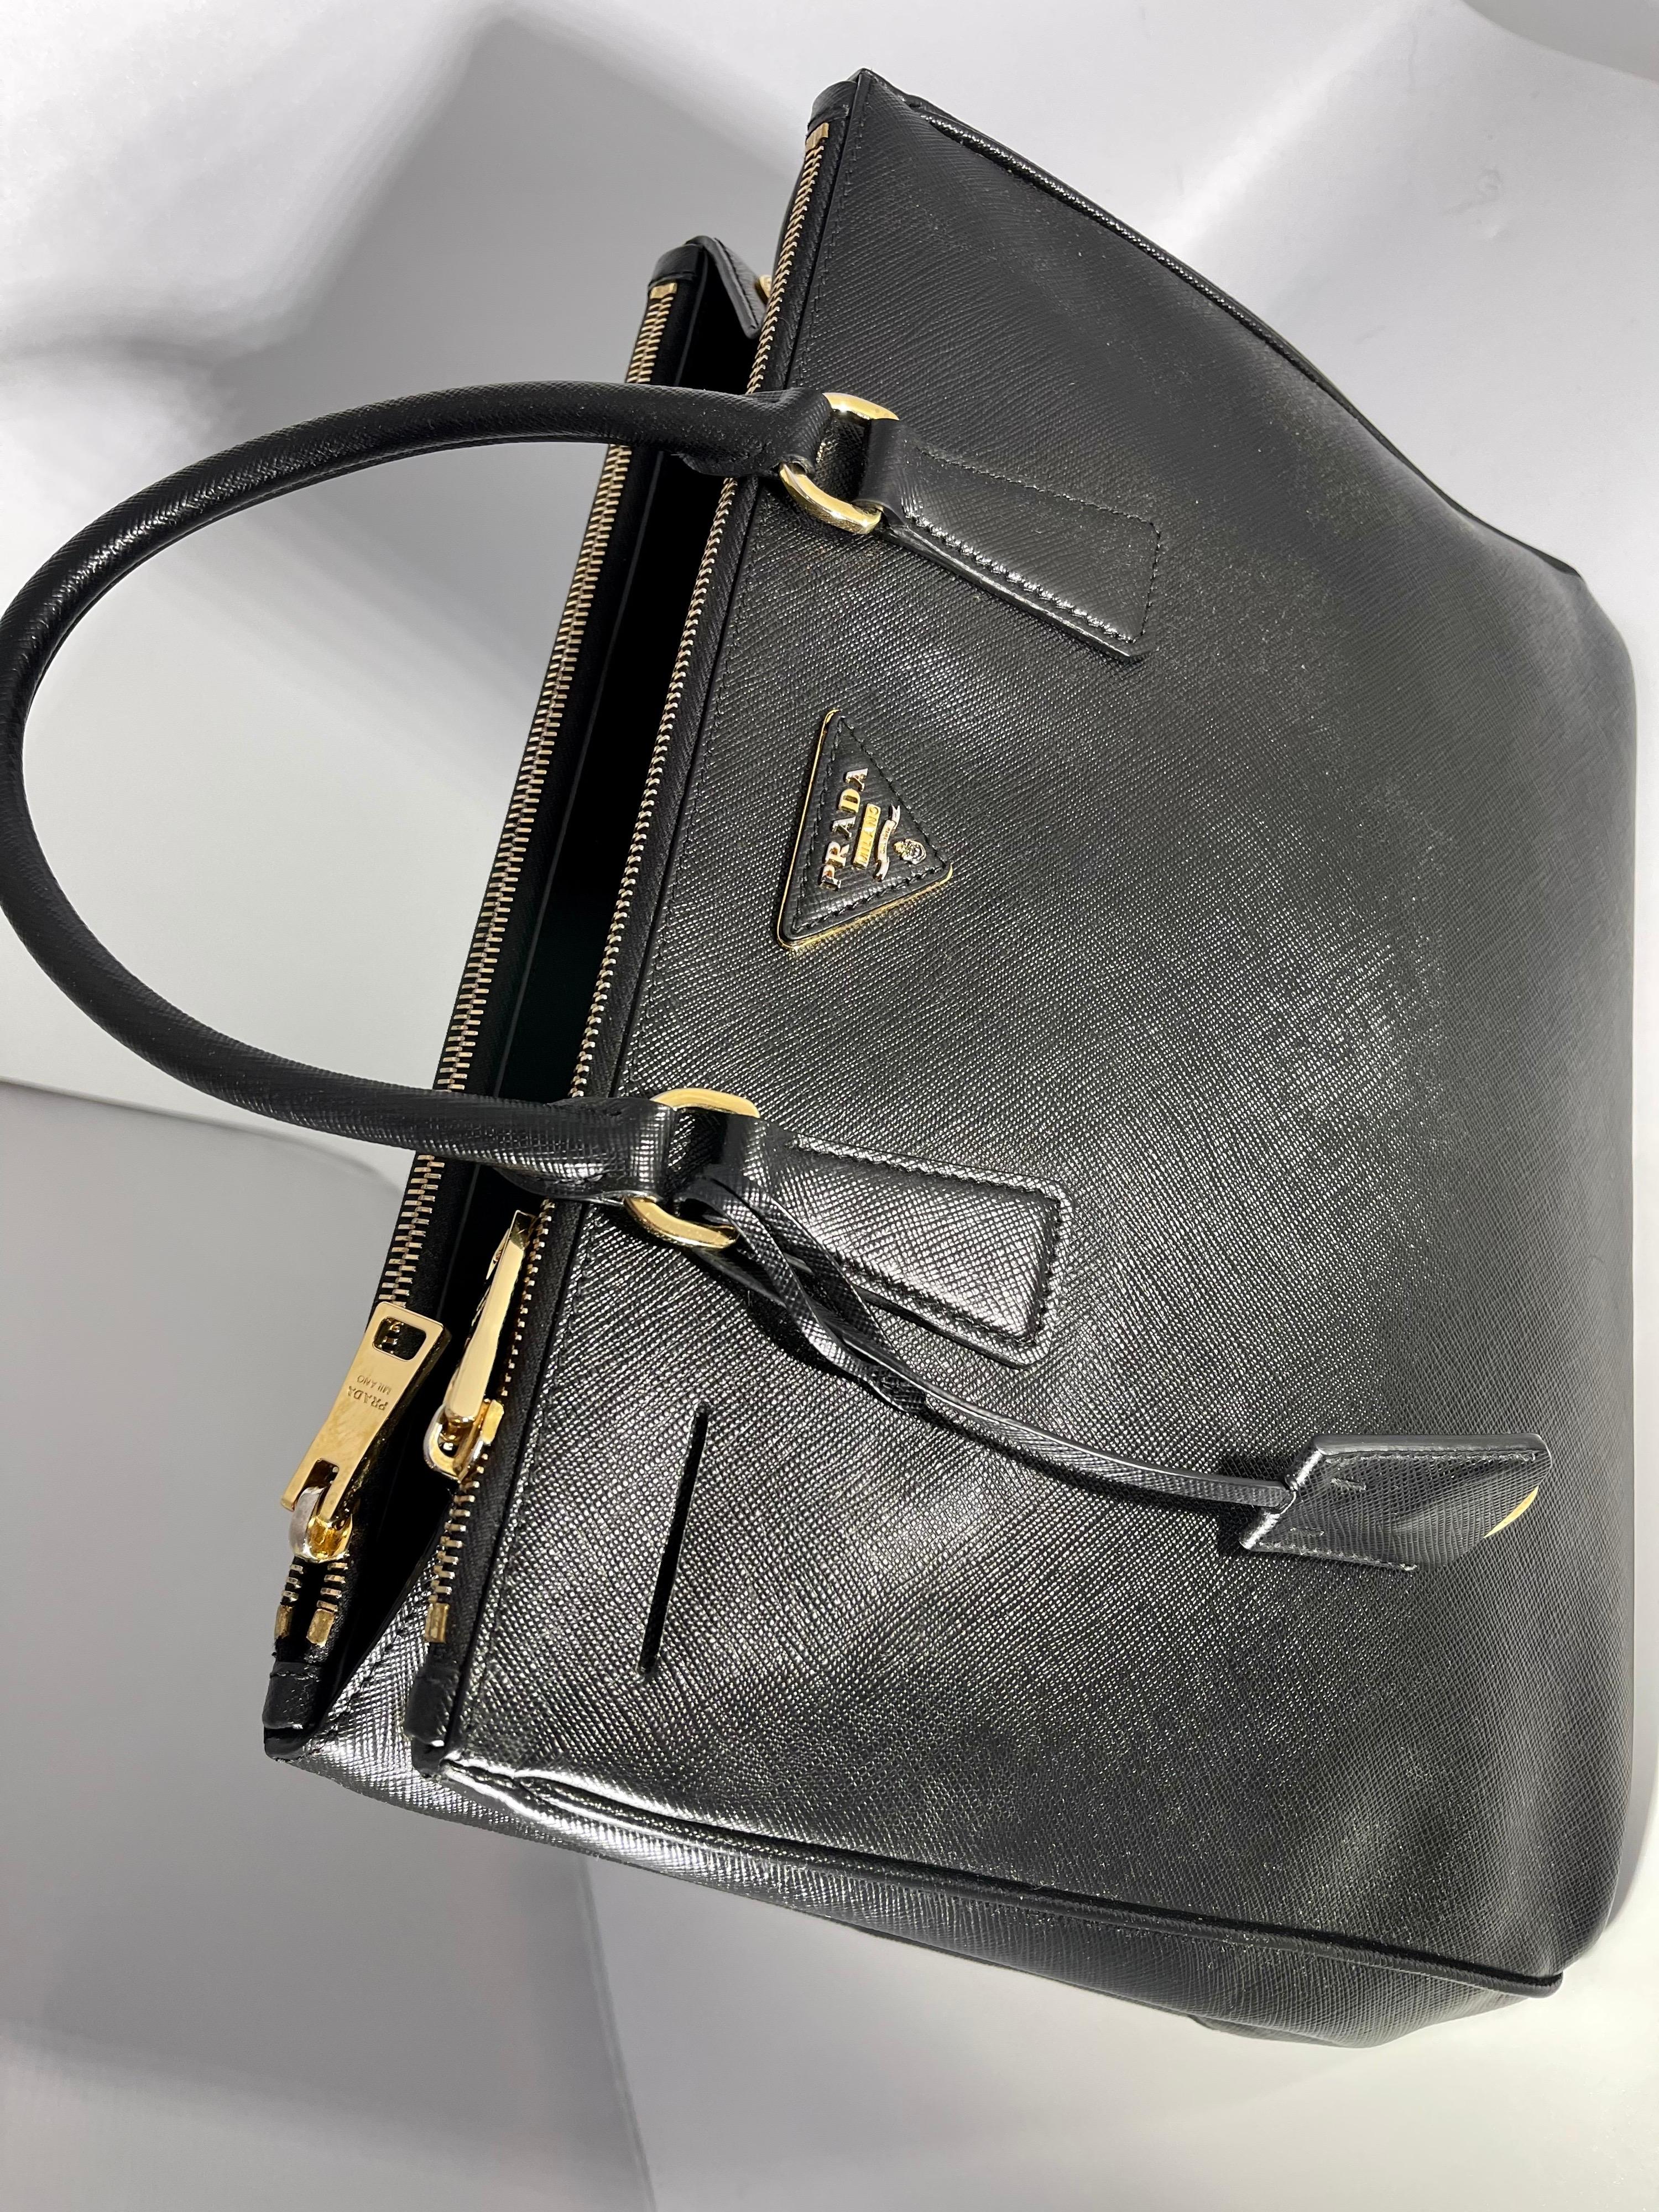 Prada Saffiano Medium Executive Tote Bag, Black (Nero), Double Zip Tote Bag  For Sale 6